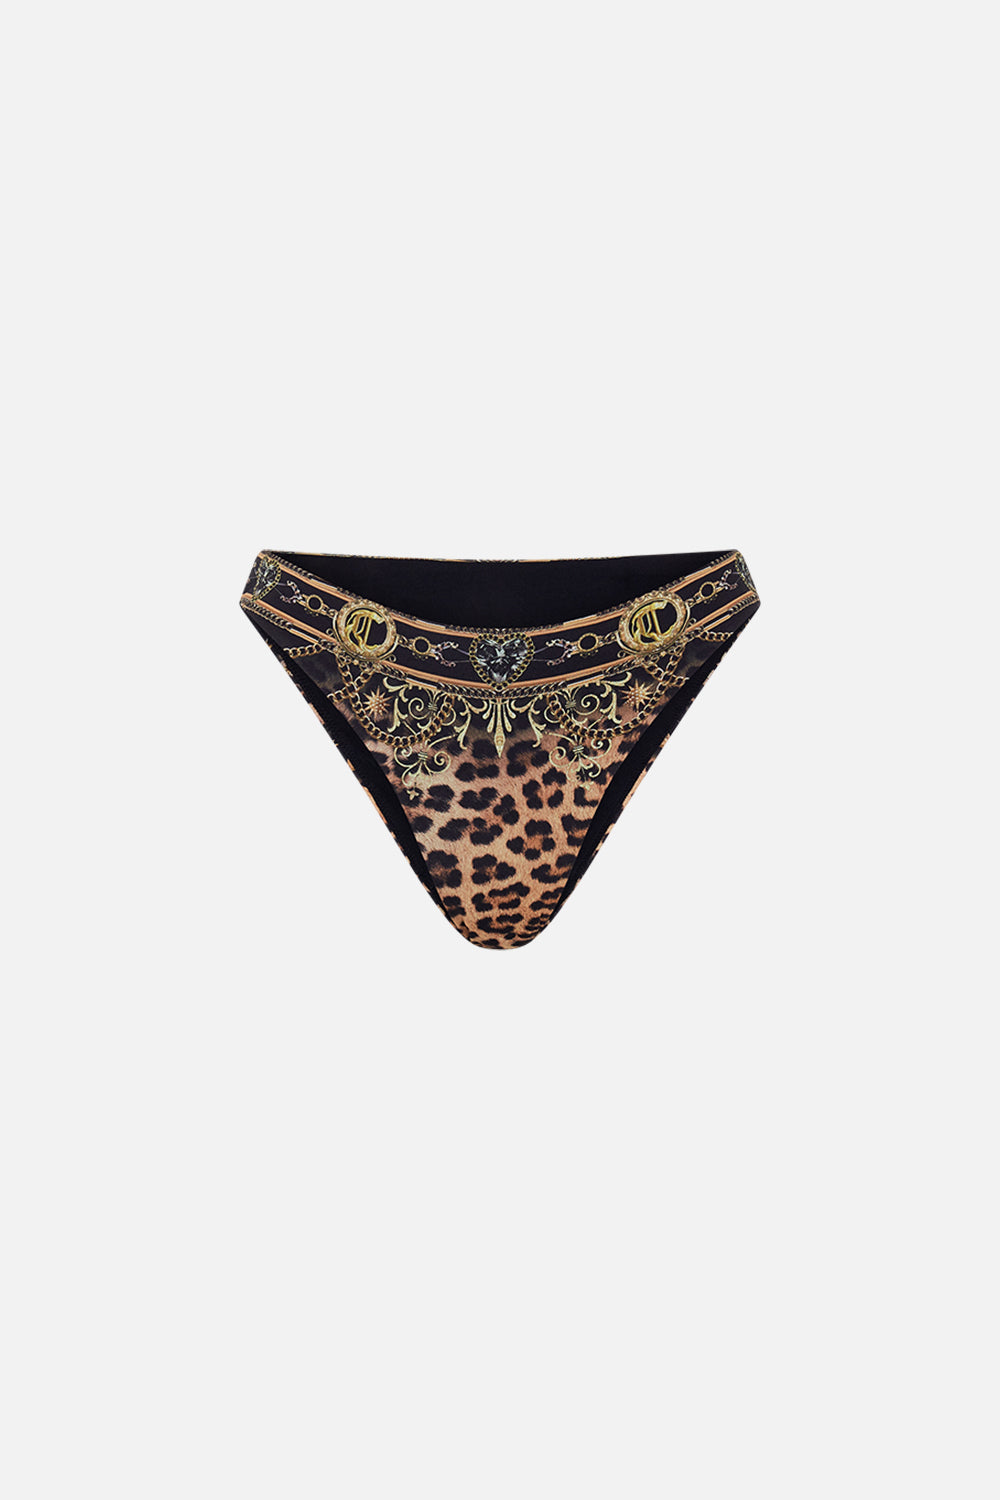 CAMILLA  luxury bikini bottom in Masked At Moonlight print